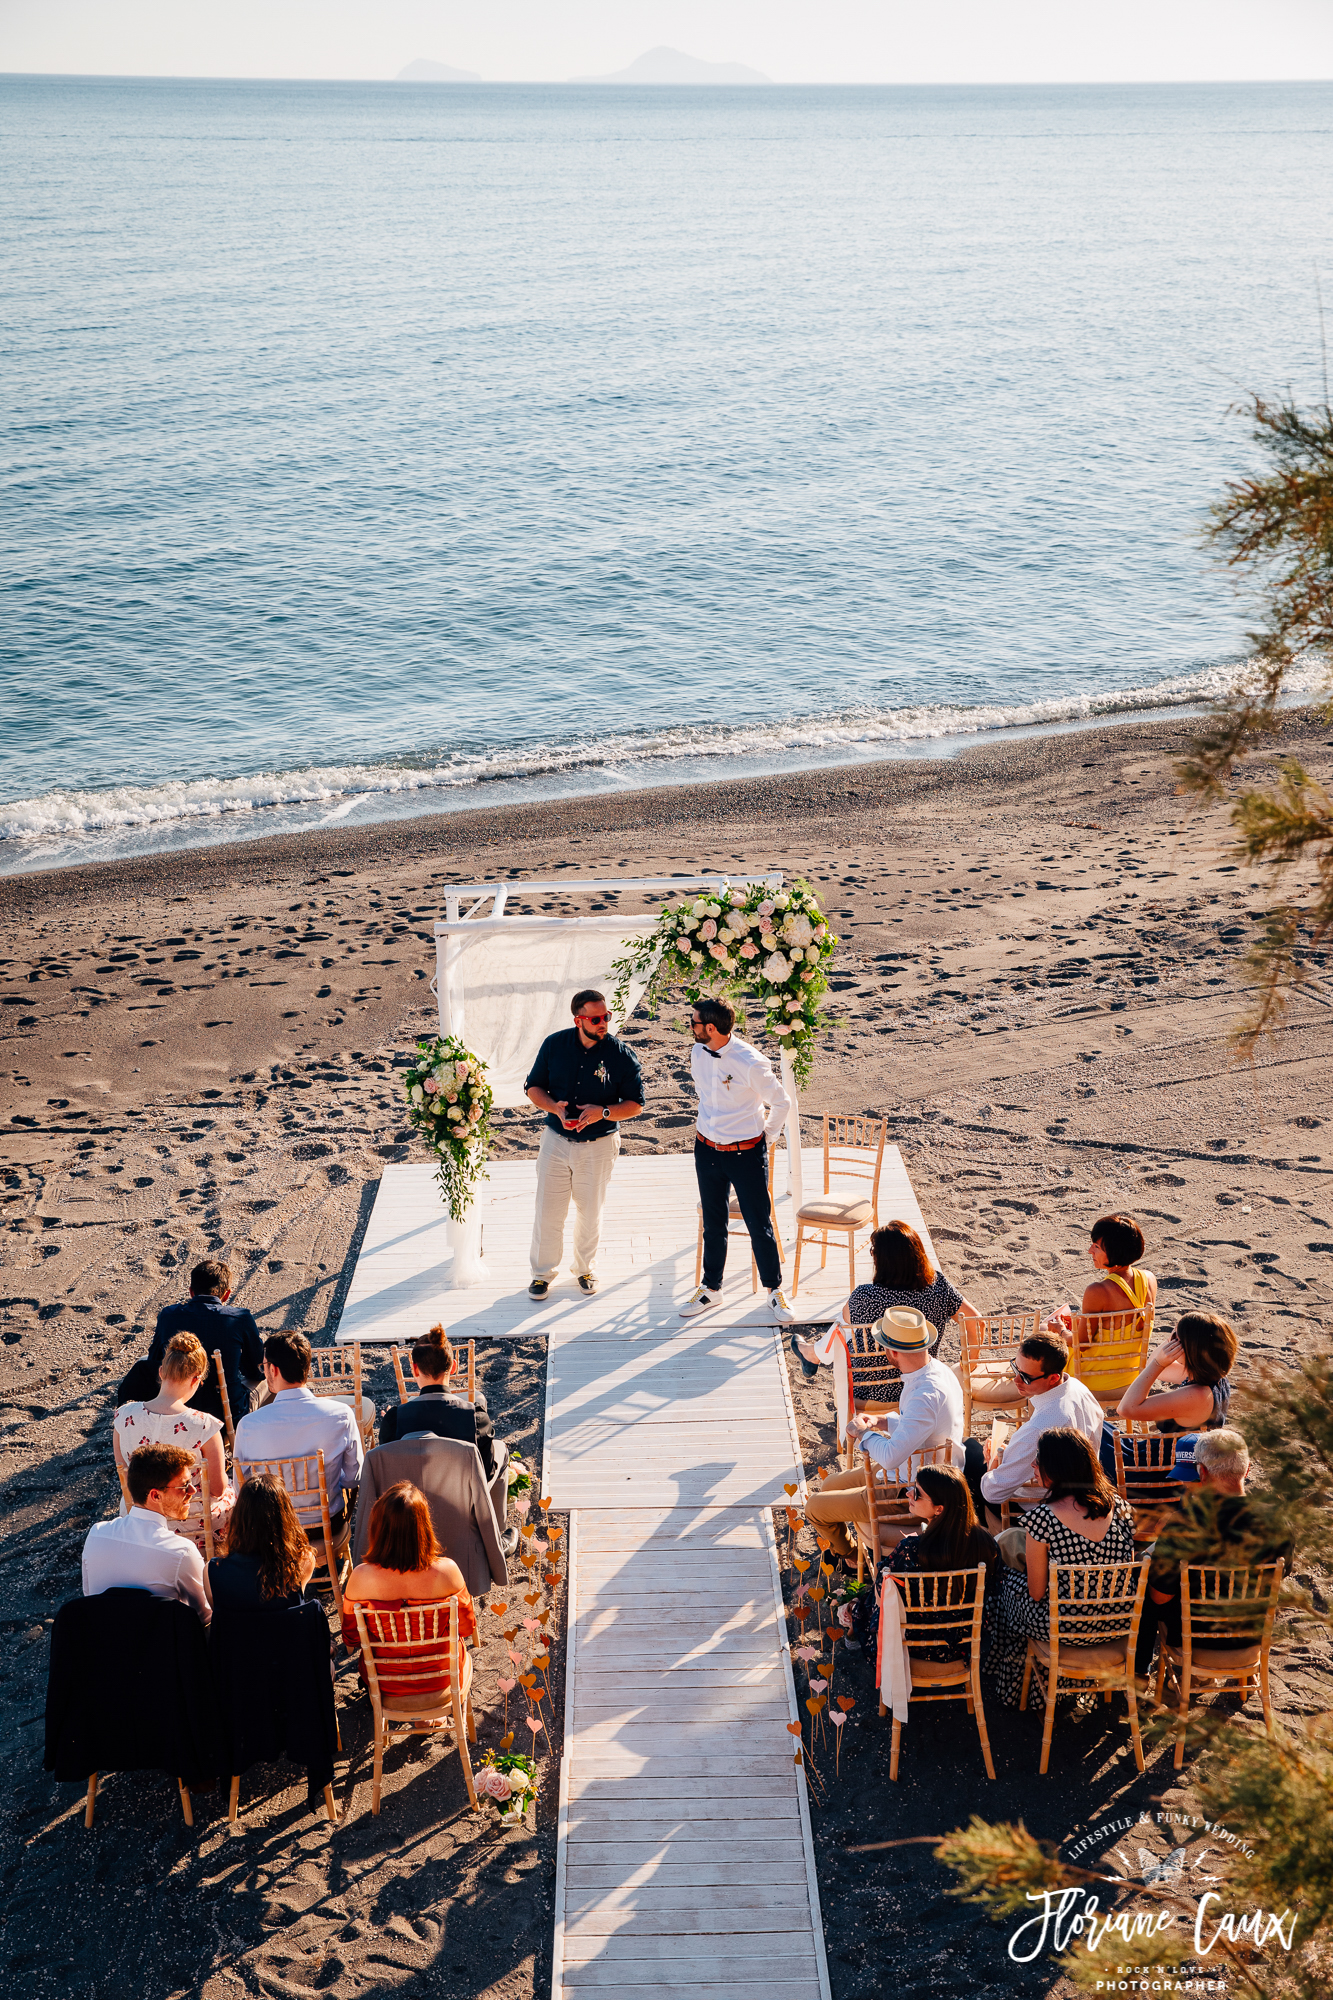 mariage-santorin-grece-ceremonie-laique-plage (1)